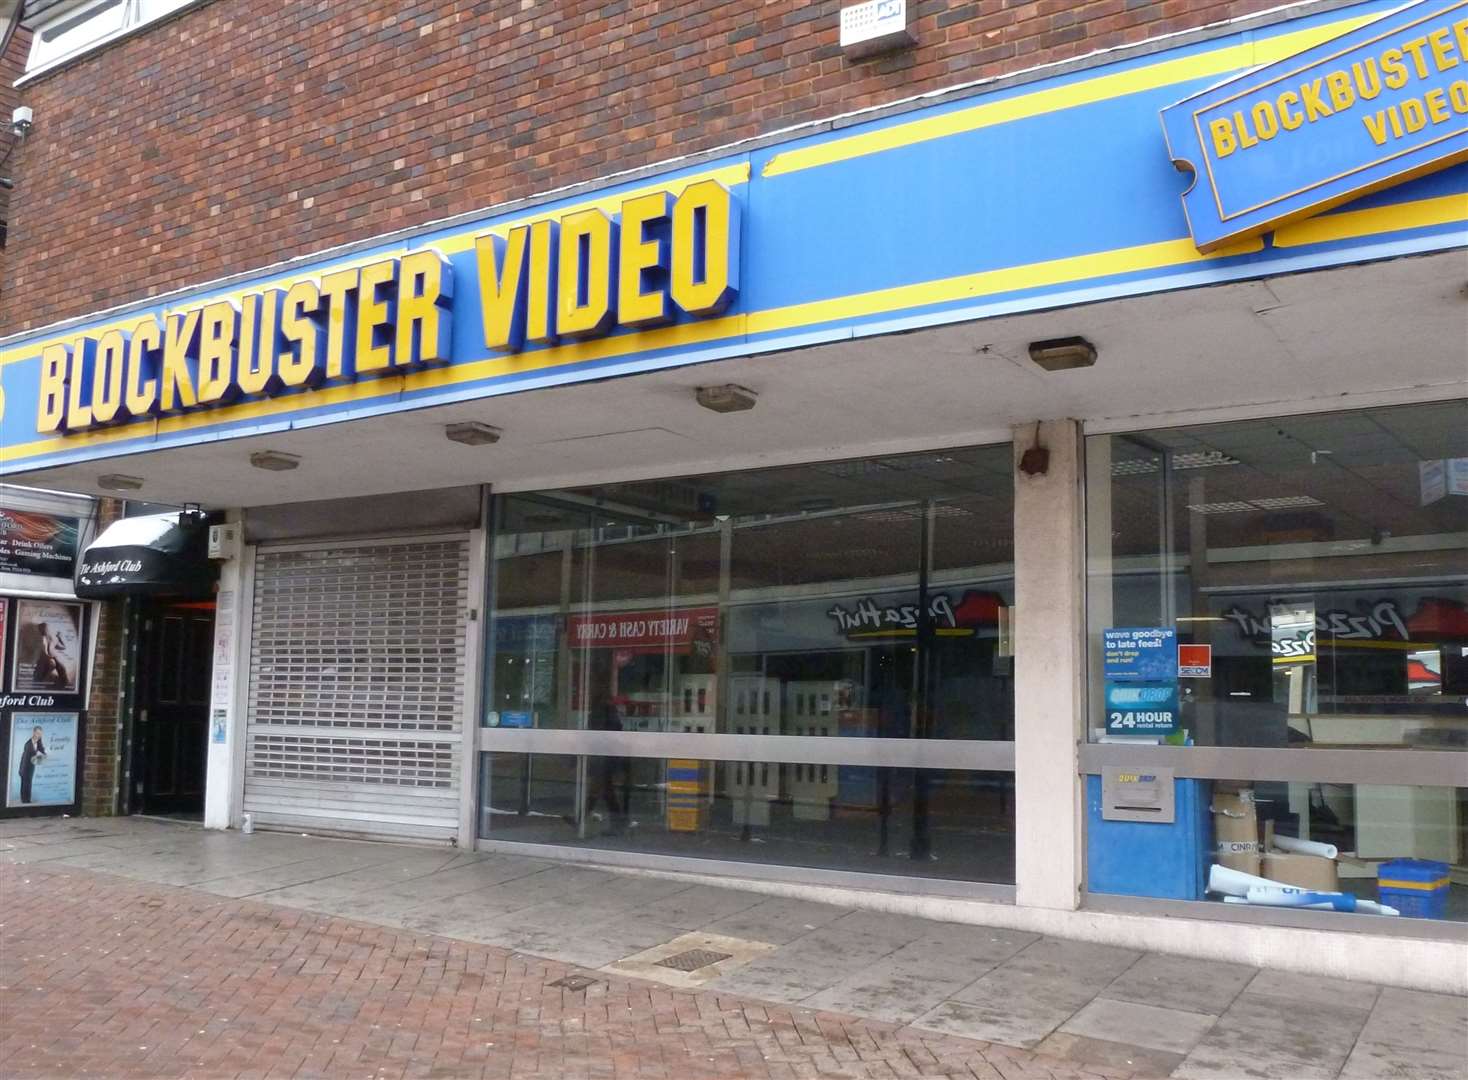 Blockbuster transformed the video rental market